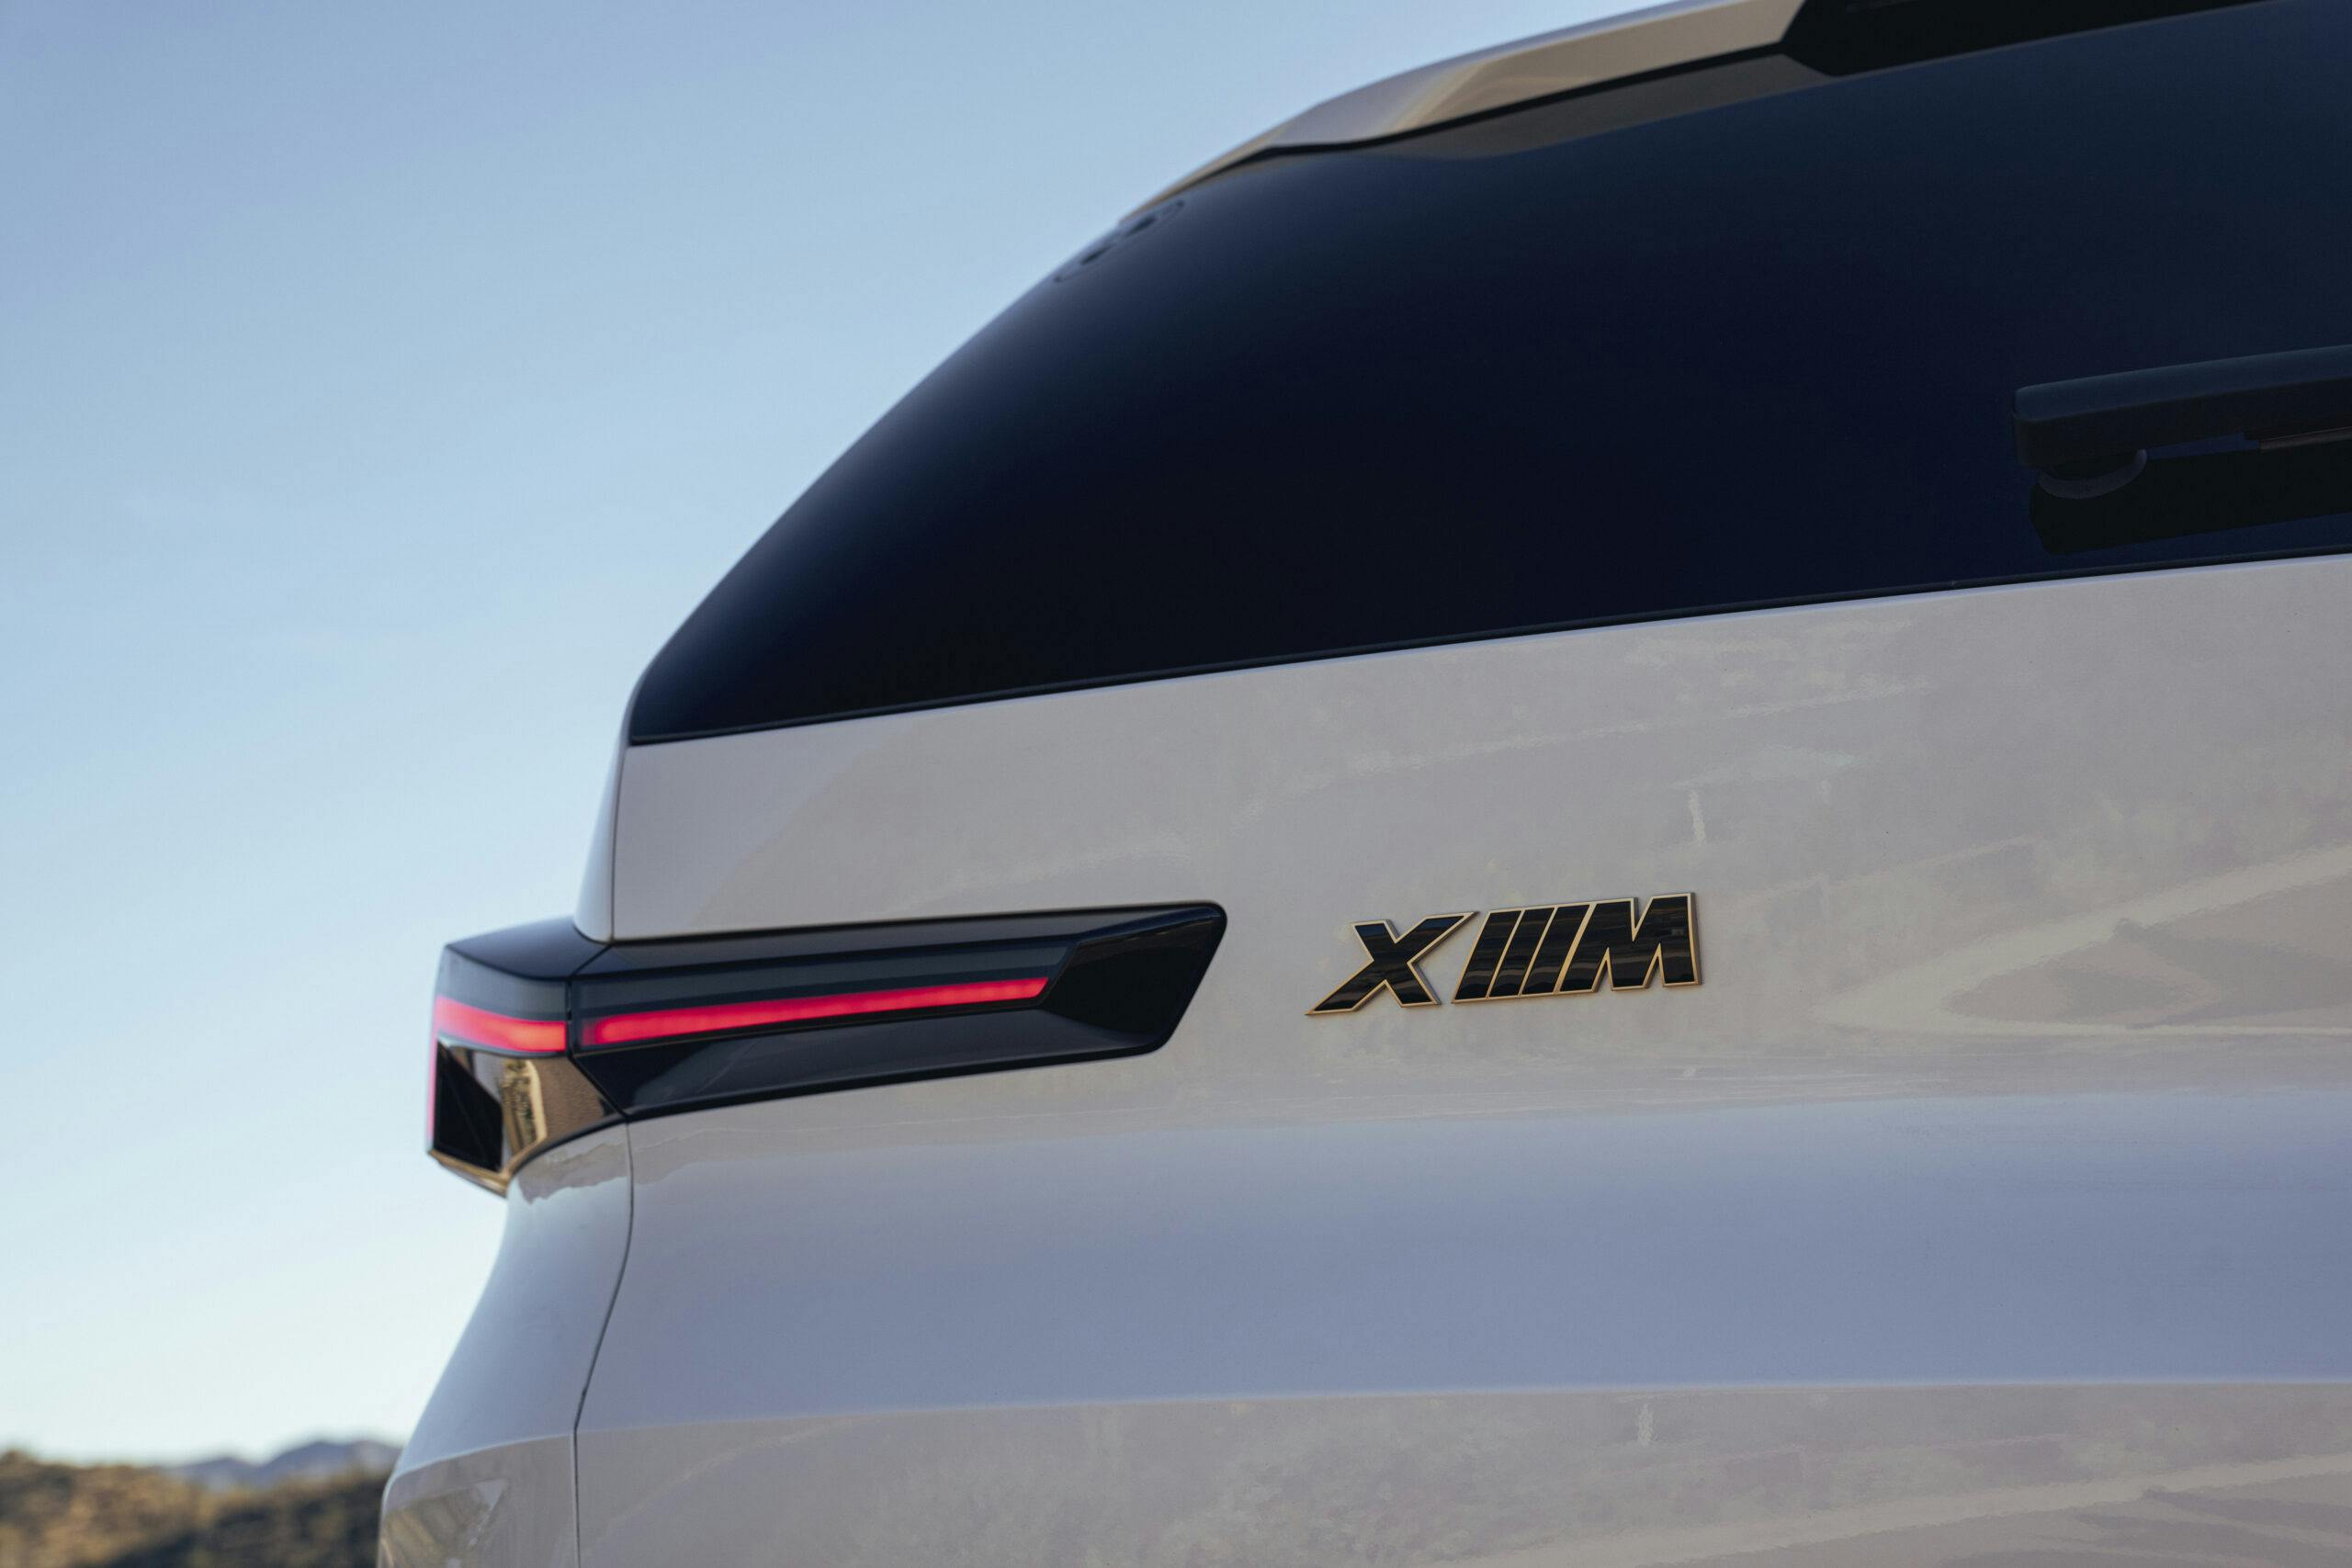 2023 BMW XM White taillight badge rear